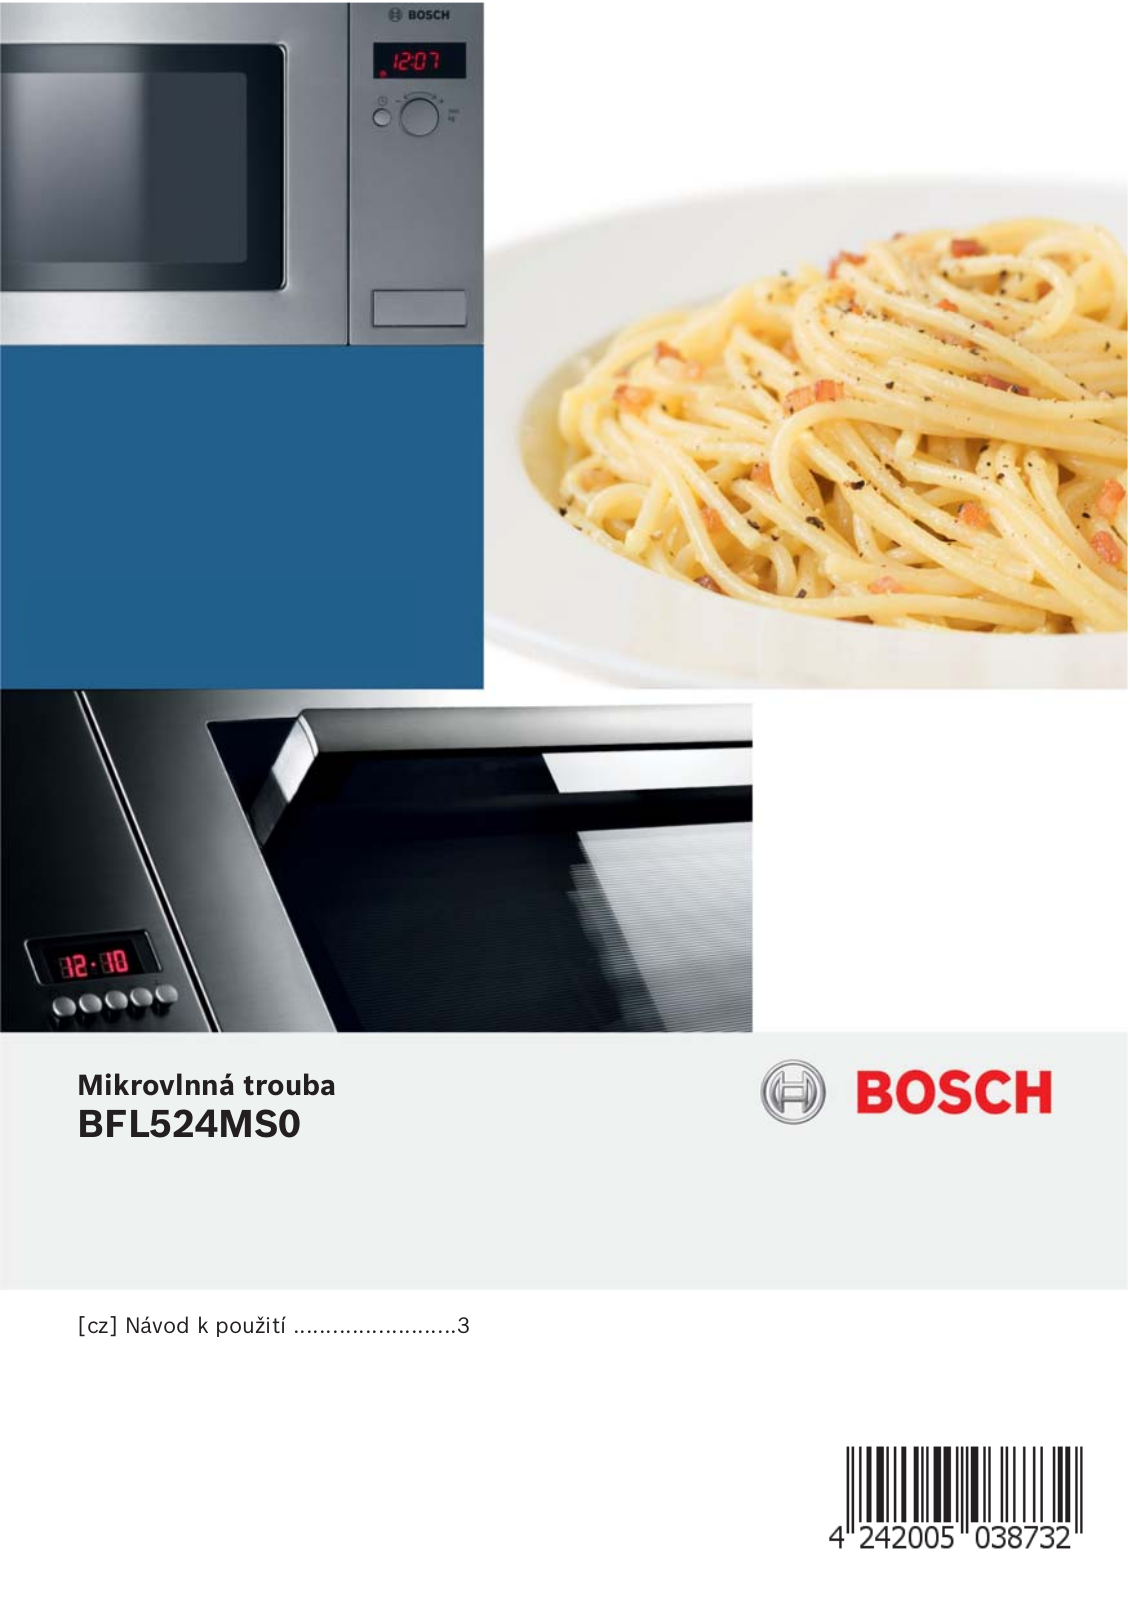 Bosch BFL524MB0 User Manual